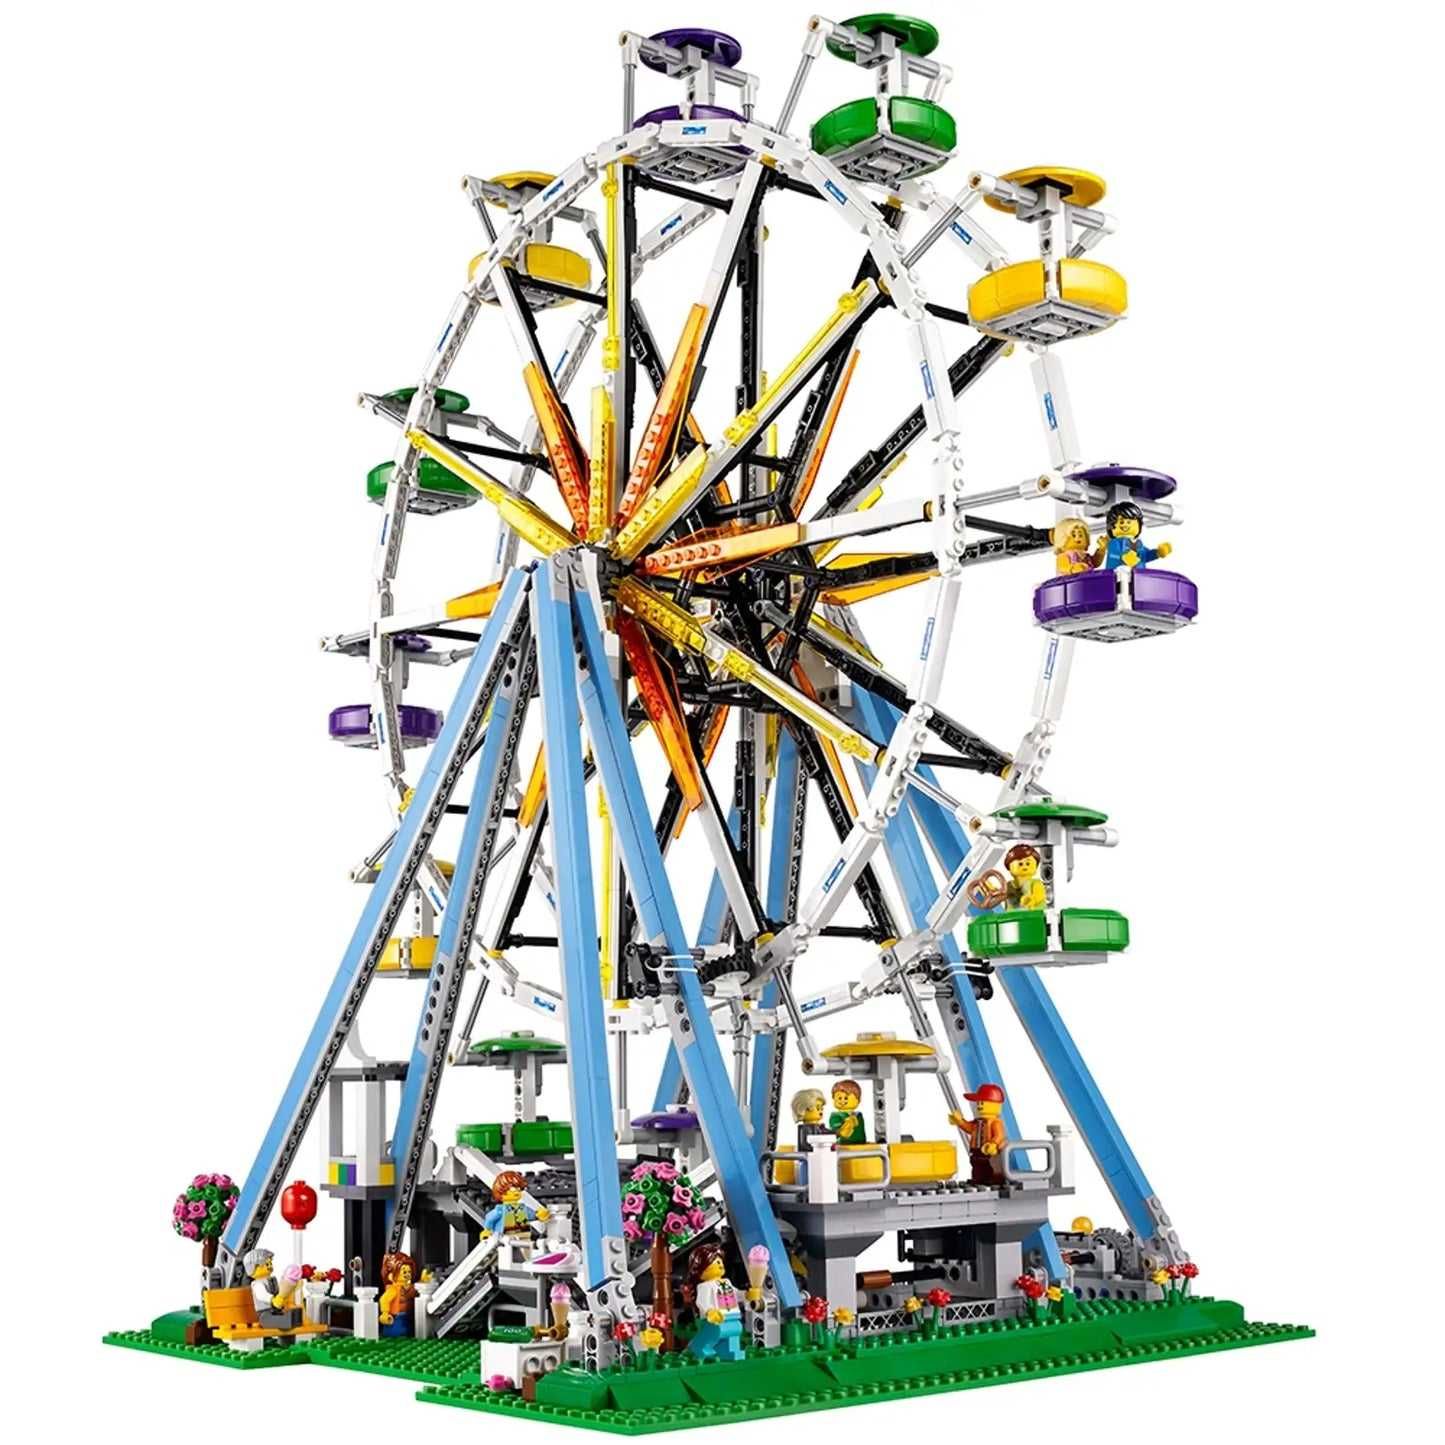 LEGO 10257 10247 Carousel